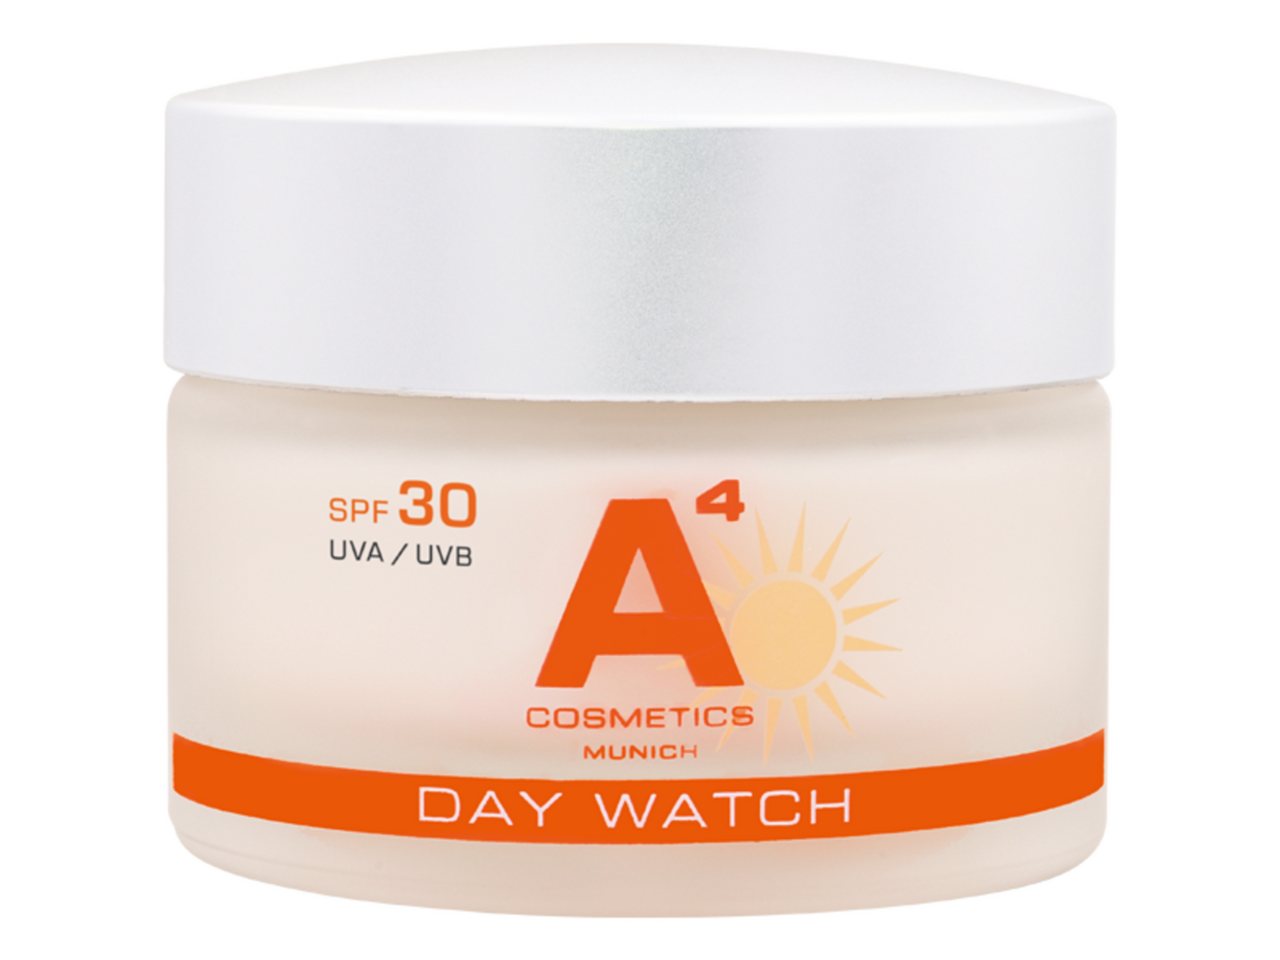 A4 Cosmetics Tagescreme Day Watch SPF 30 von A4 Cosmetics